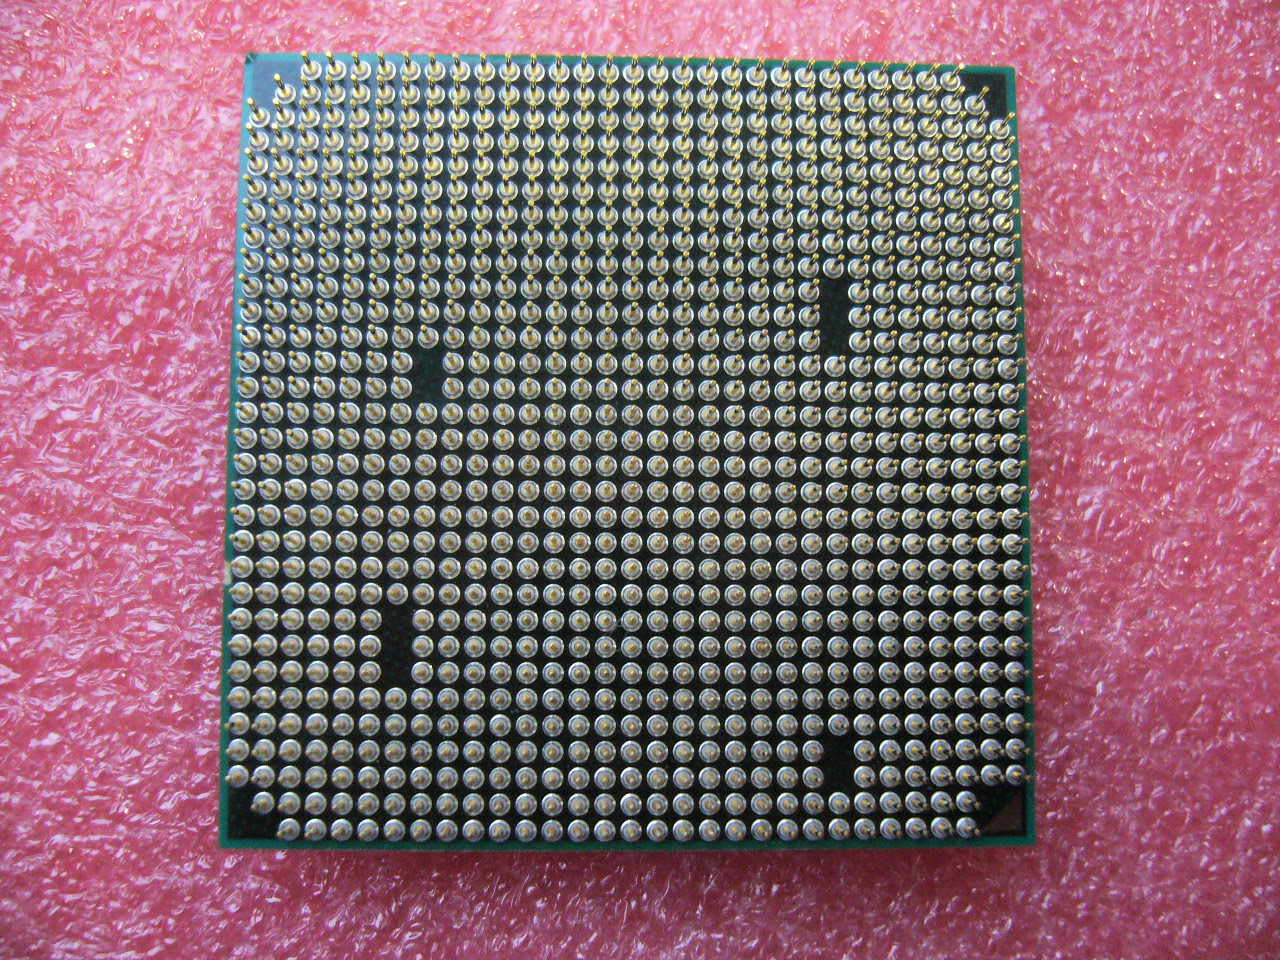 QTY 1x AMD Athlon II X2 245e 2.9 GHz Dual-Core (AD245EHDK23GM) CPU AM3 45W - zum Schließen ins Bild klicken